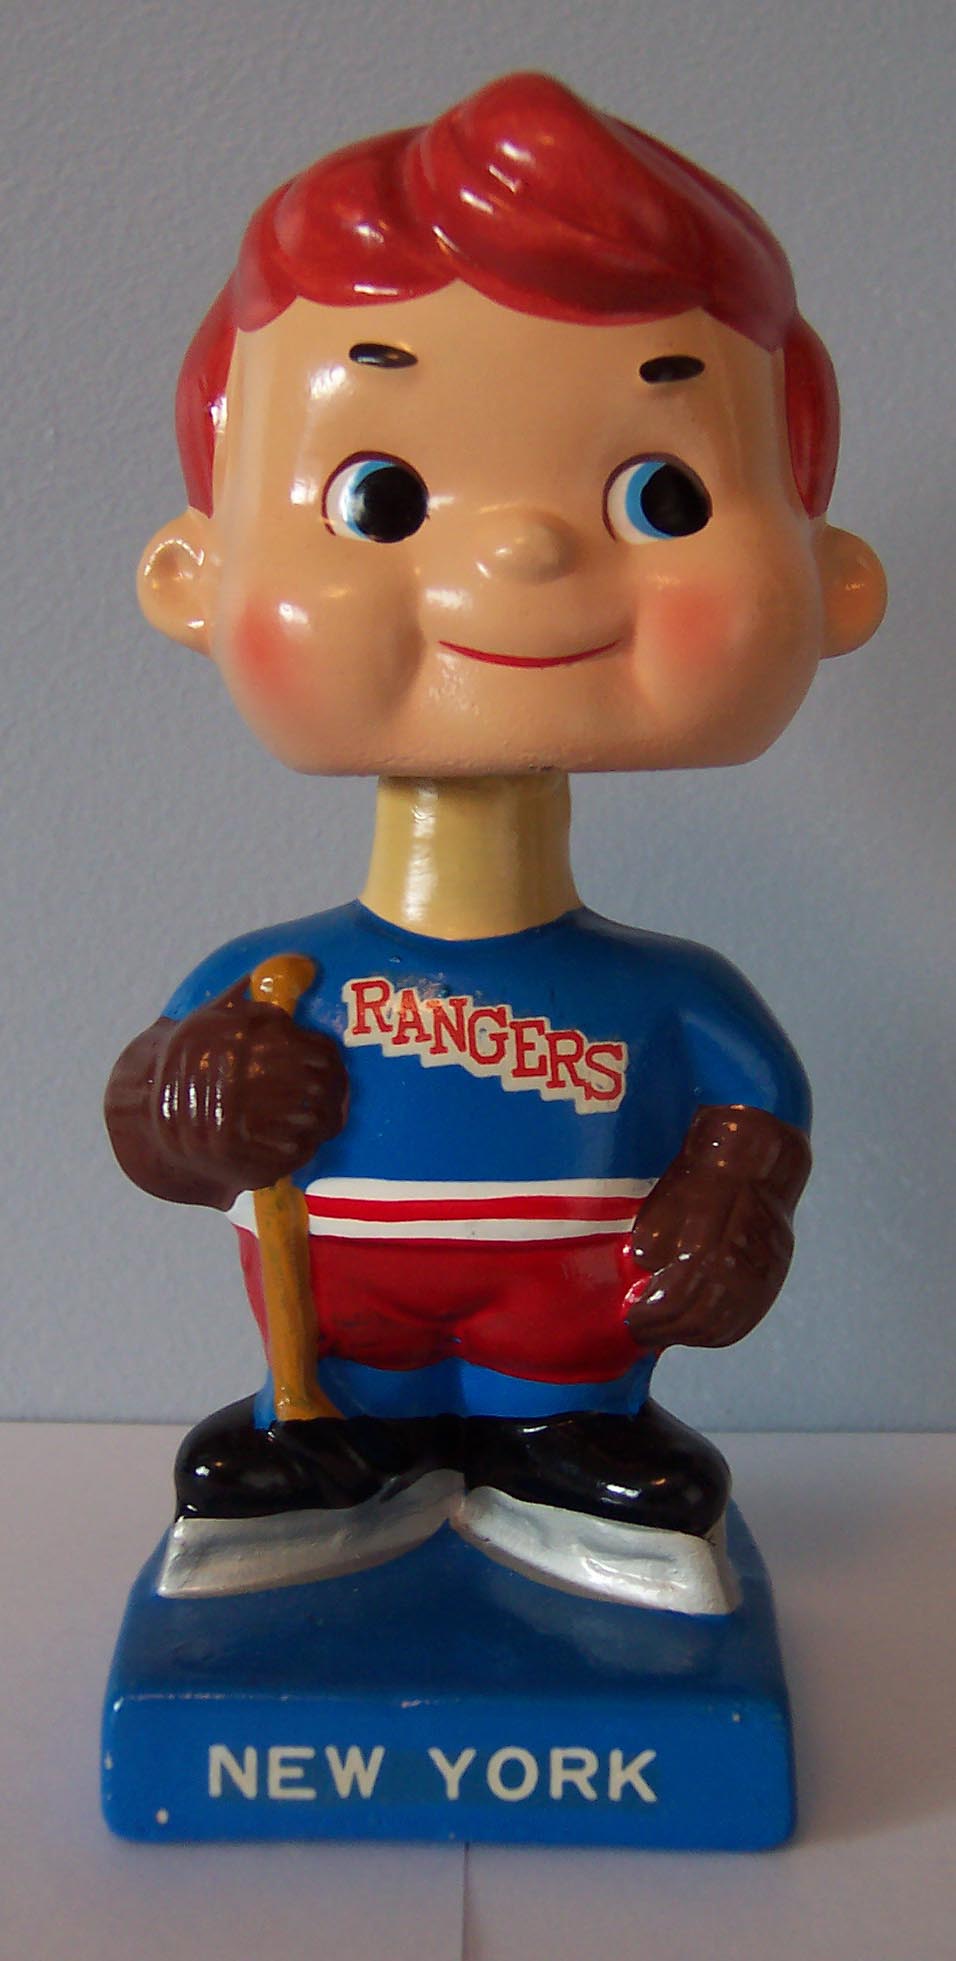 New_York_Rangers doll